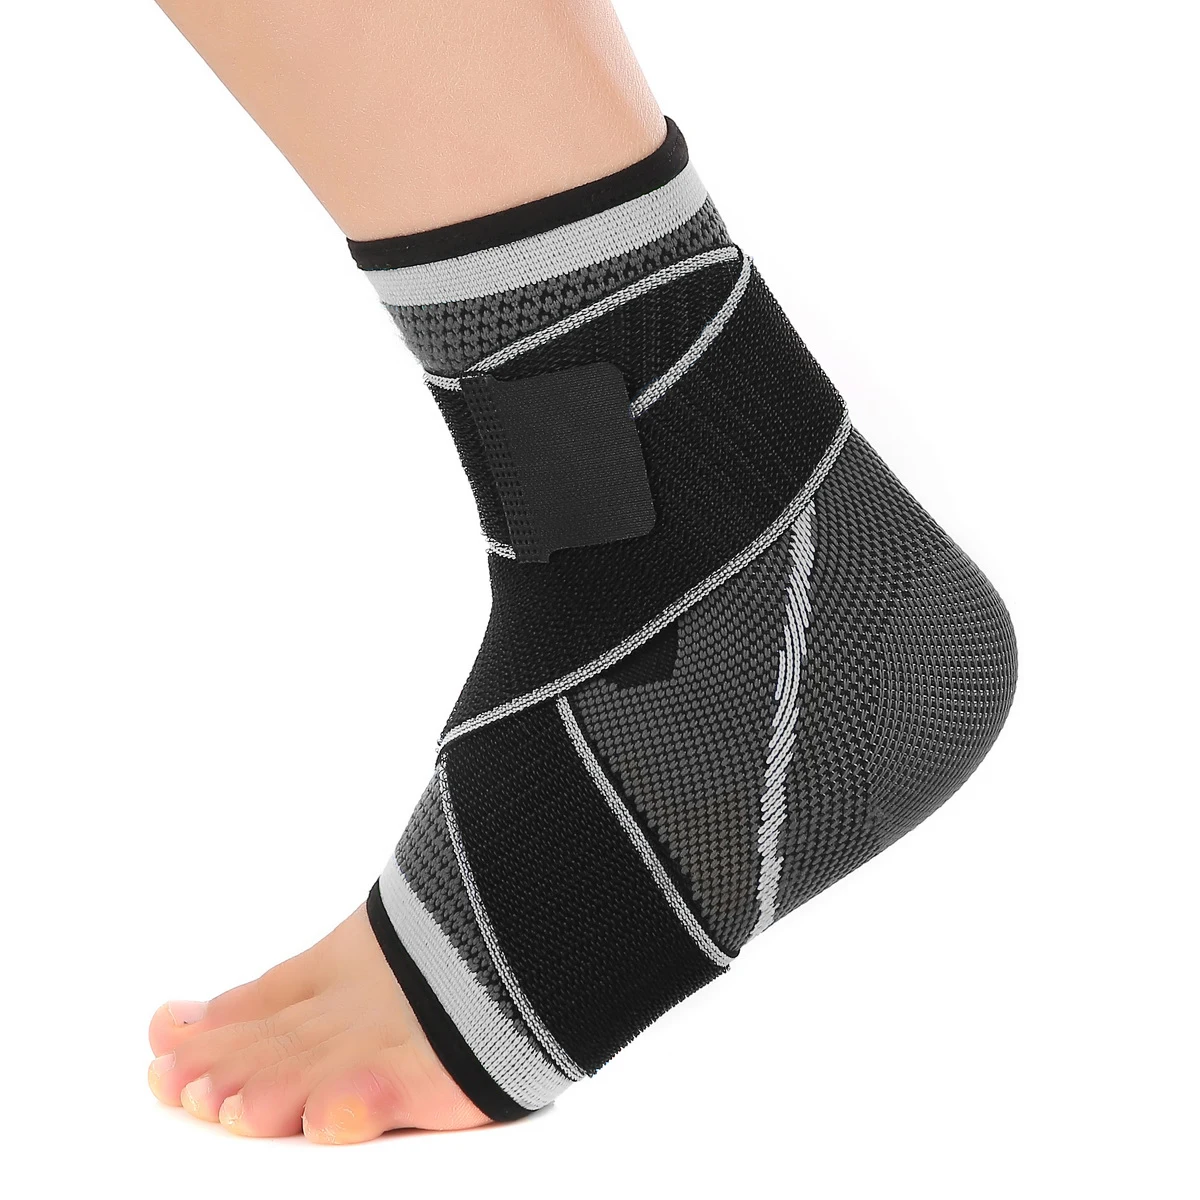 

Mumian 1PCS 3d Weaving Pressurized Bandage Elastic Nylon Strap Ankle Support Brace for Football Basketball